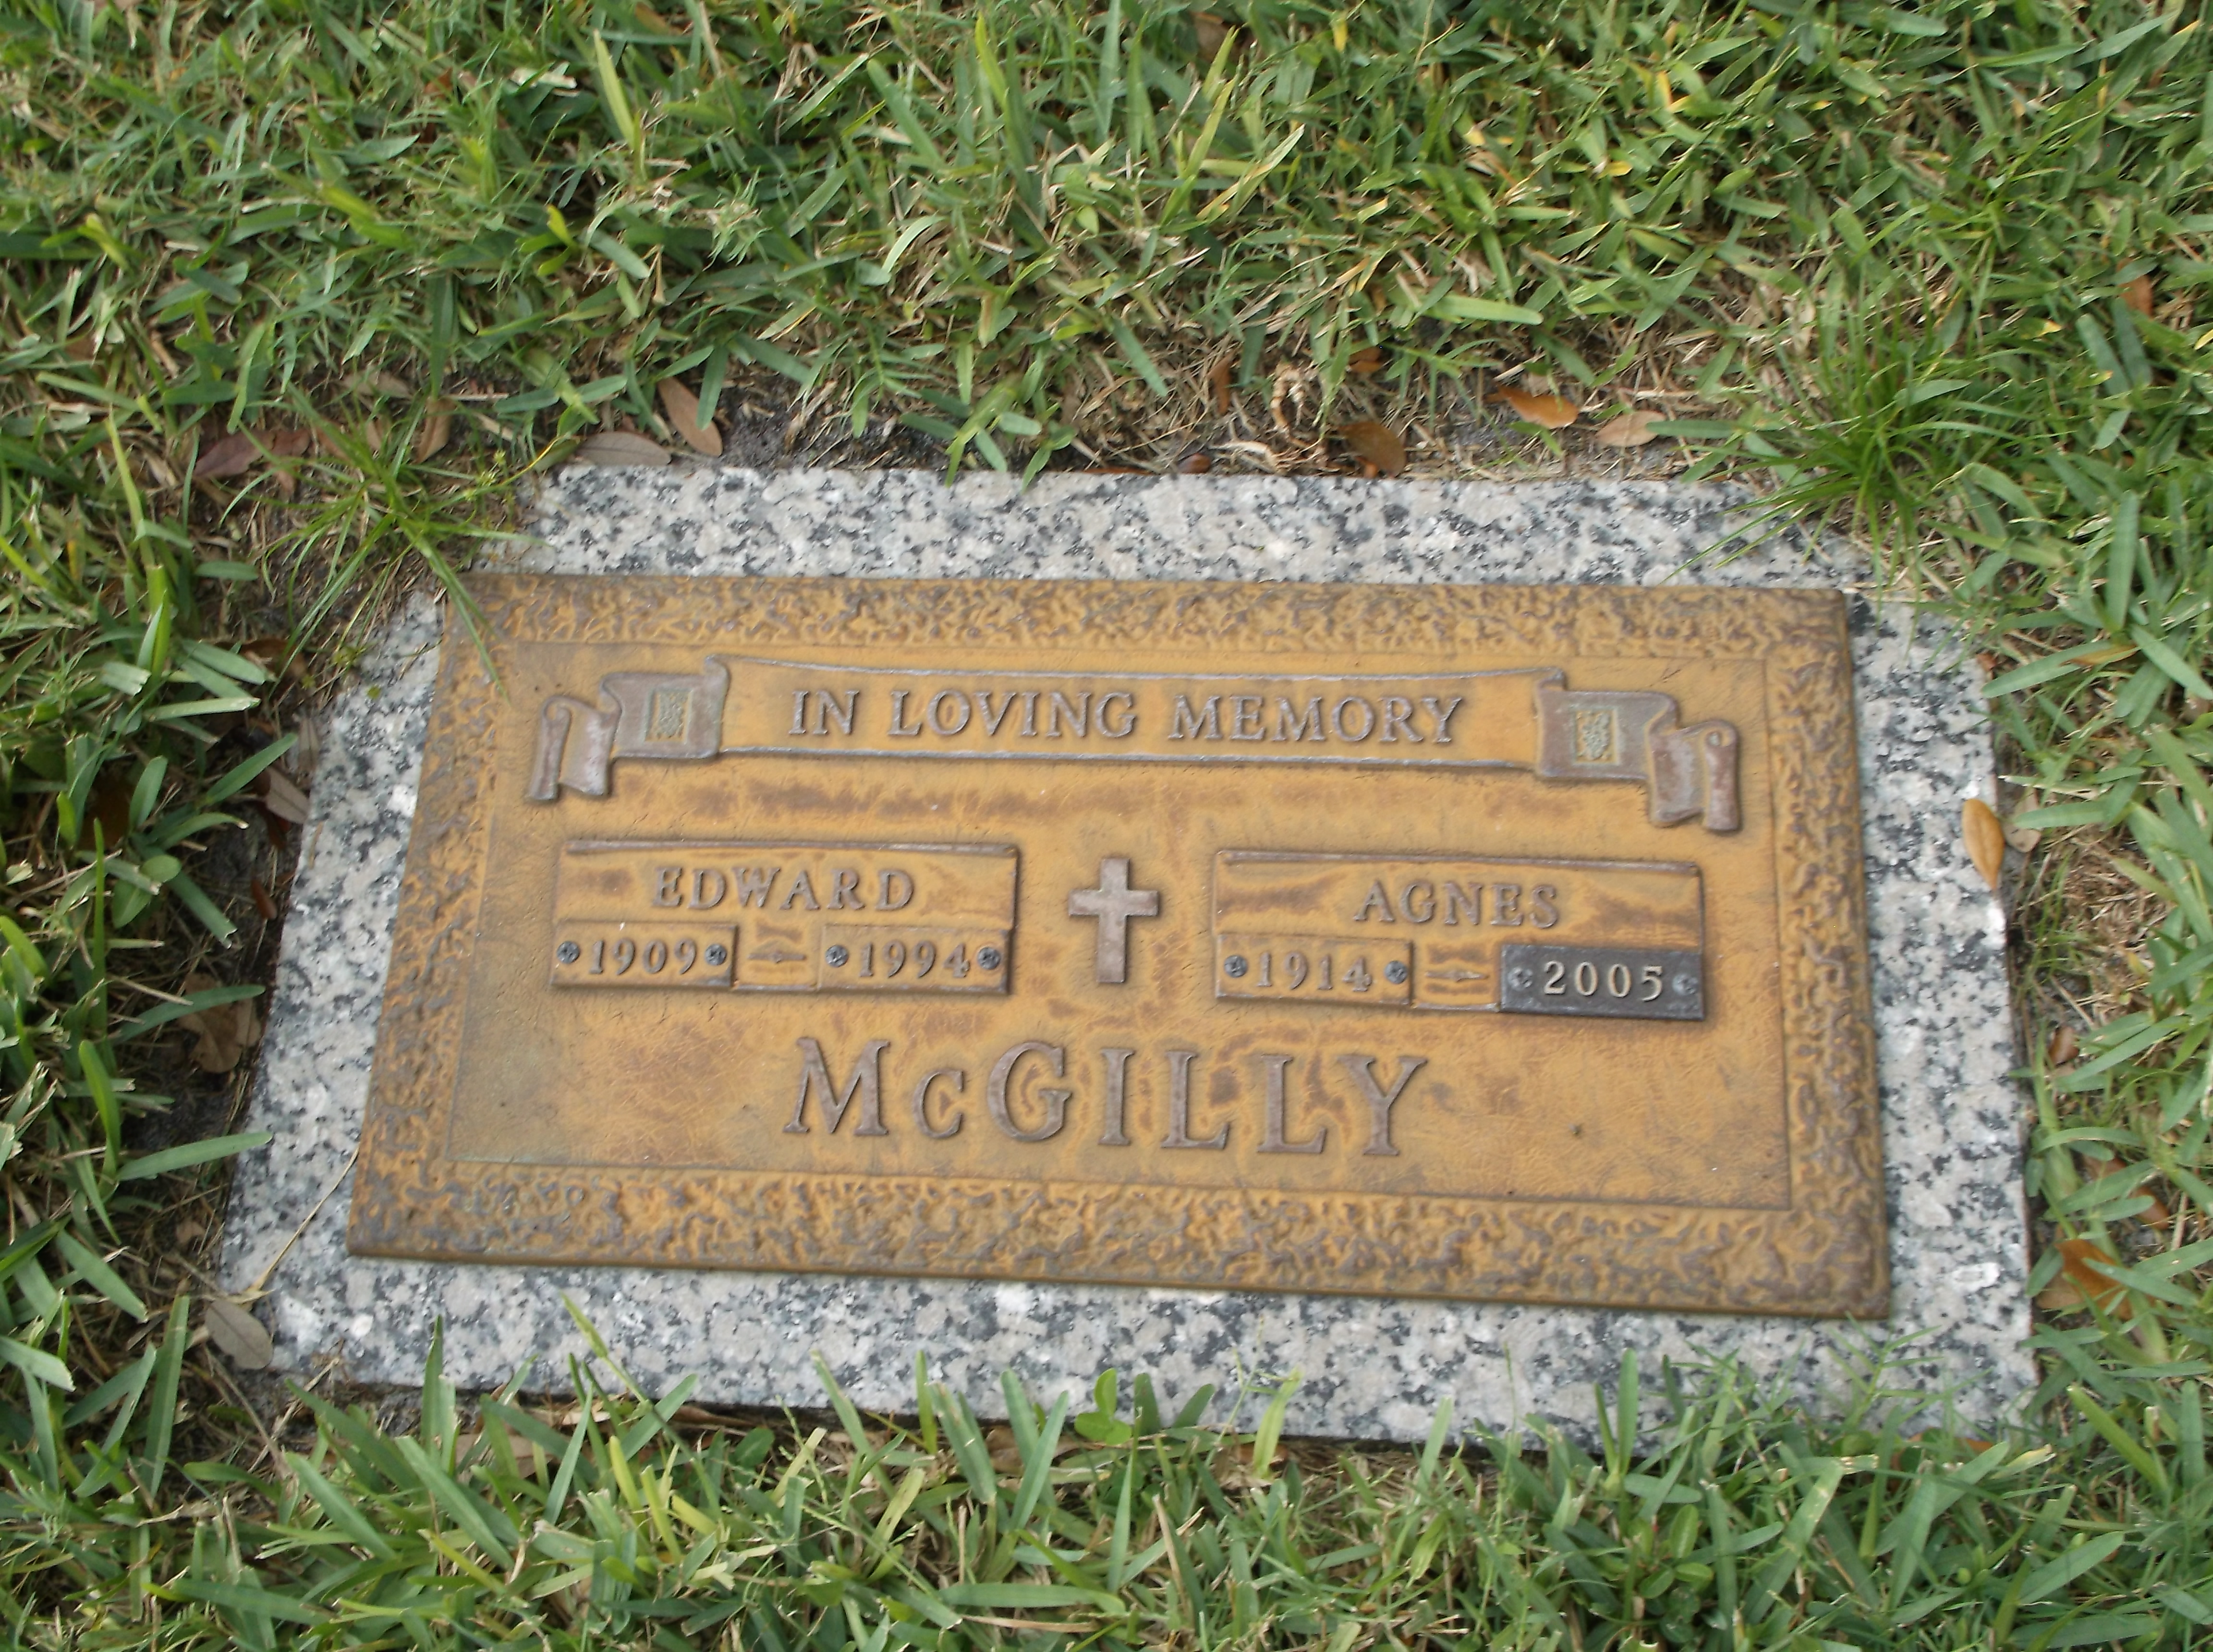 Edward McGilly